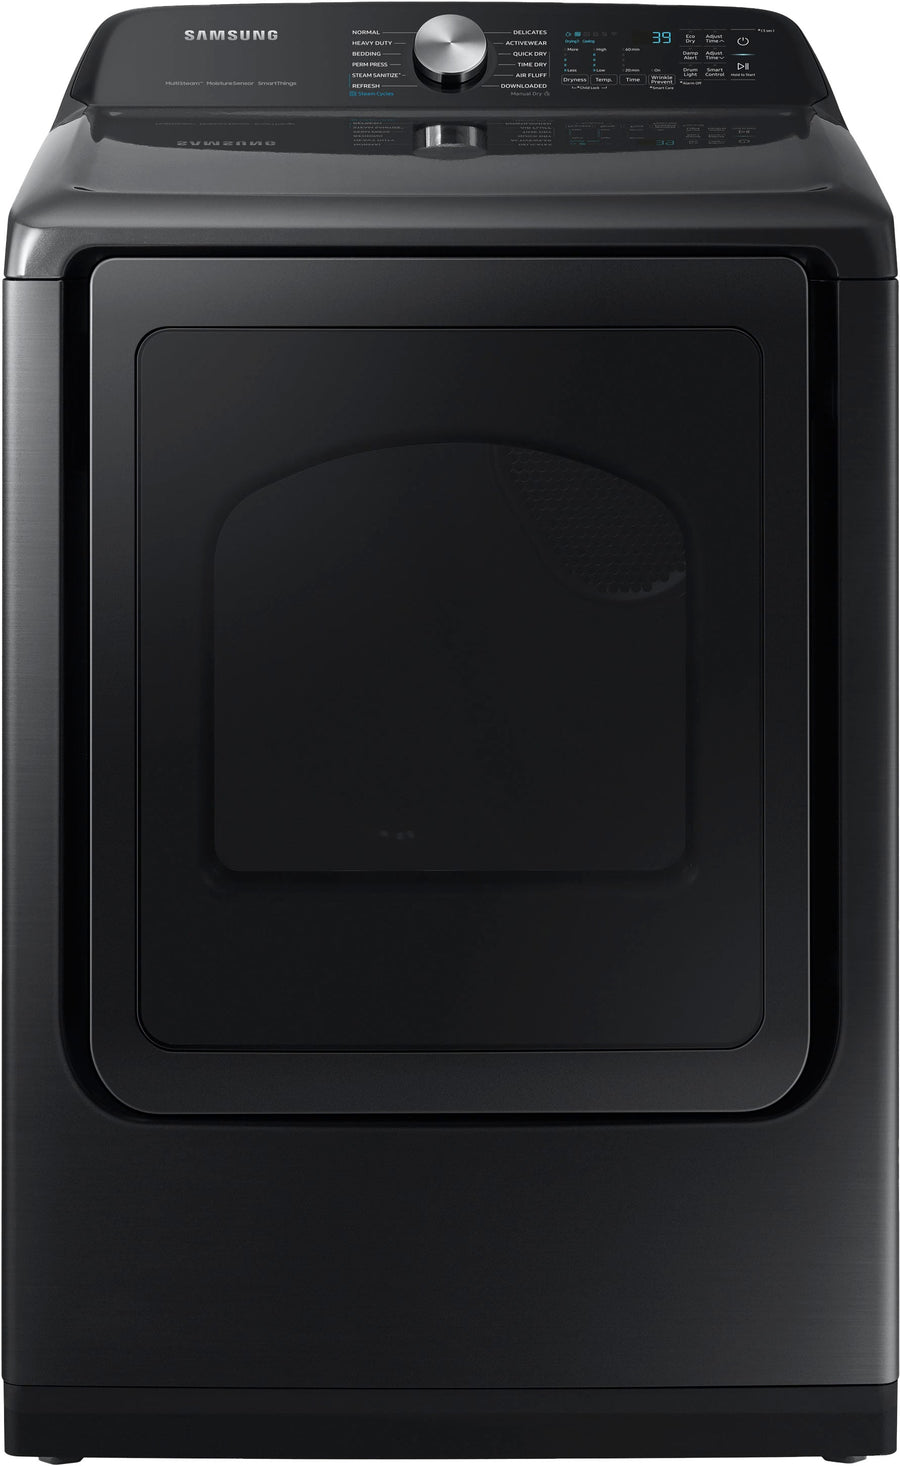 Samsung - 7.4 cu. ft. Smart Electric Dryer with Steam Sanitize+ - Brushed black_0